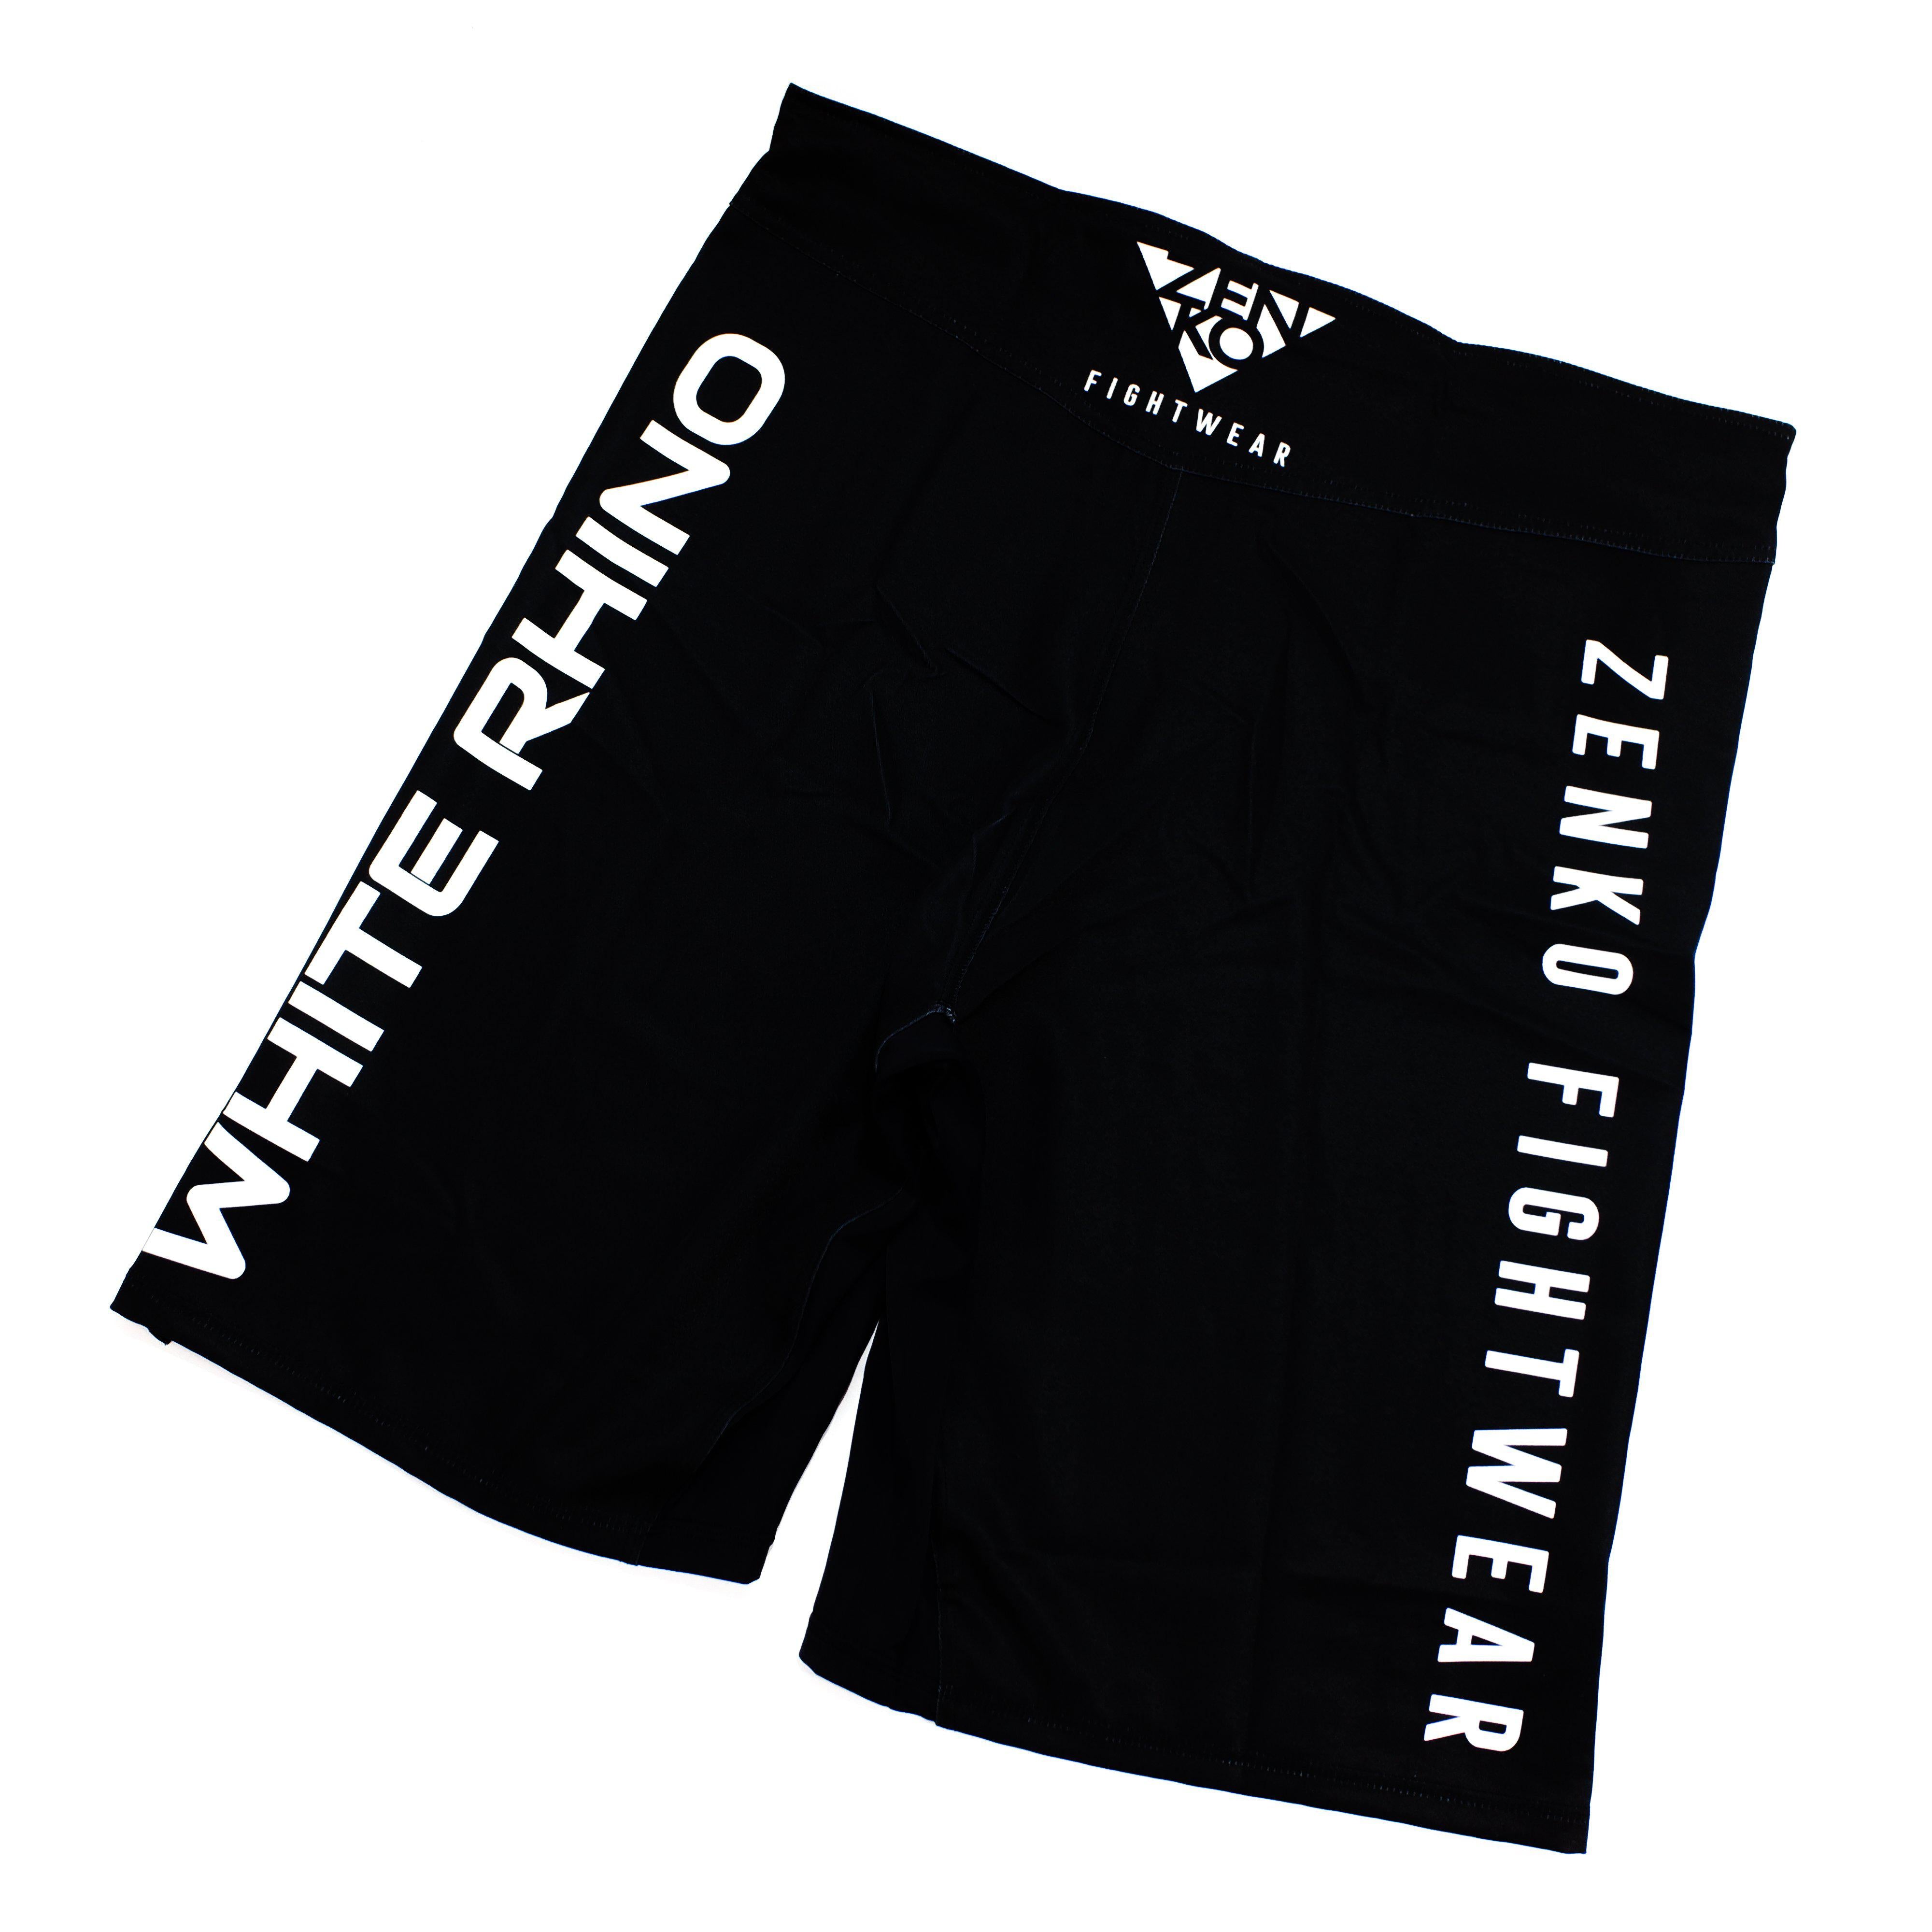 Asylum Fight Team - White Rhino Kickboxing Rhino Fight Shorts - Zenko Fightwear